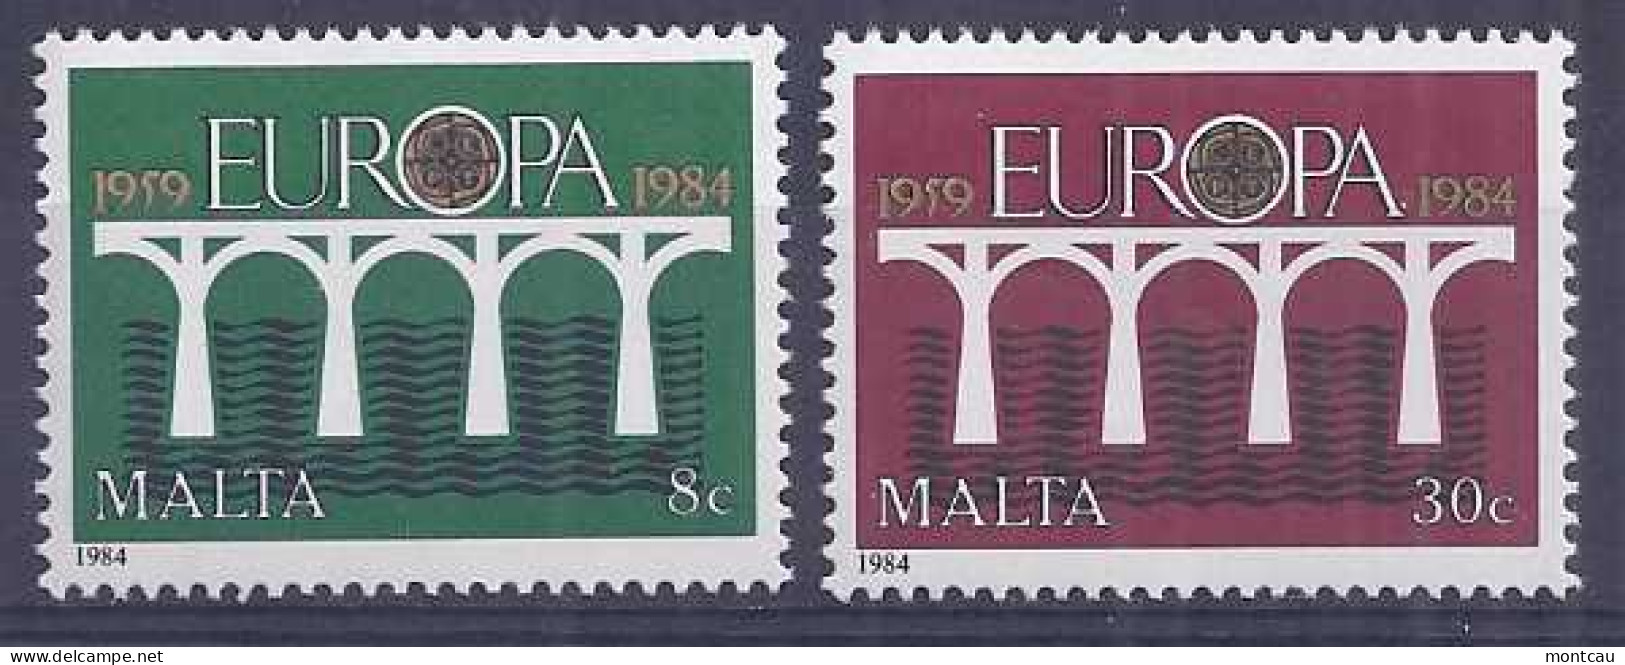 Europa 1984. Malta Mi 704-05 Sc 1984-85 Yv 685-86 (**) - 1984